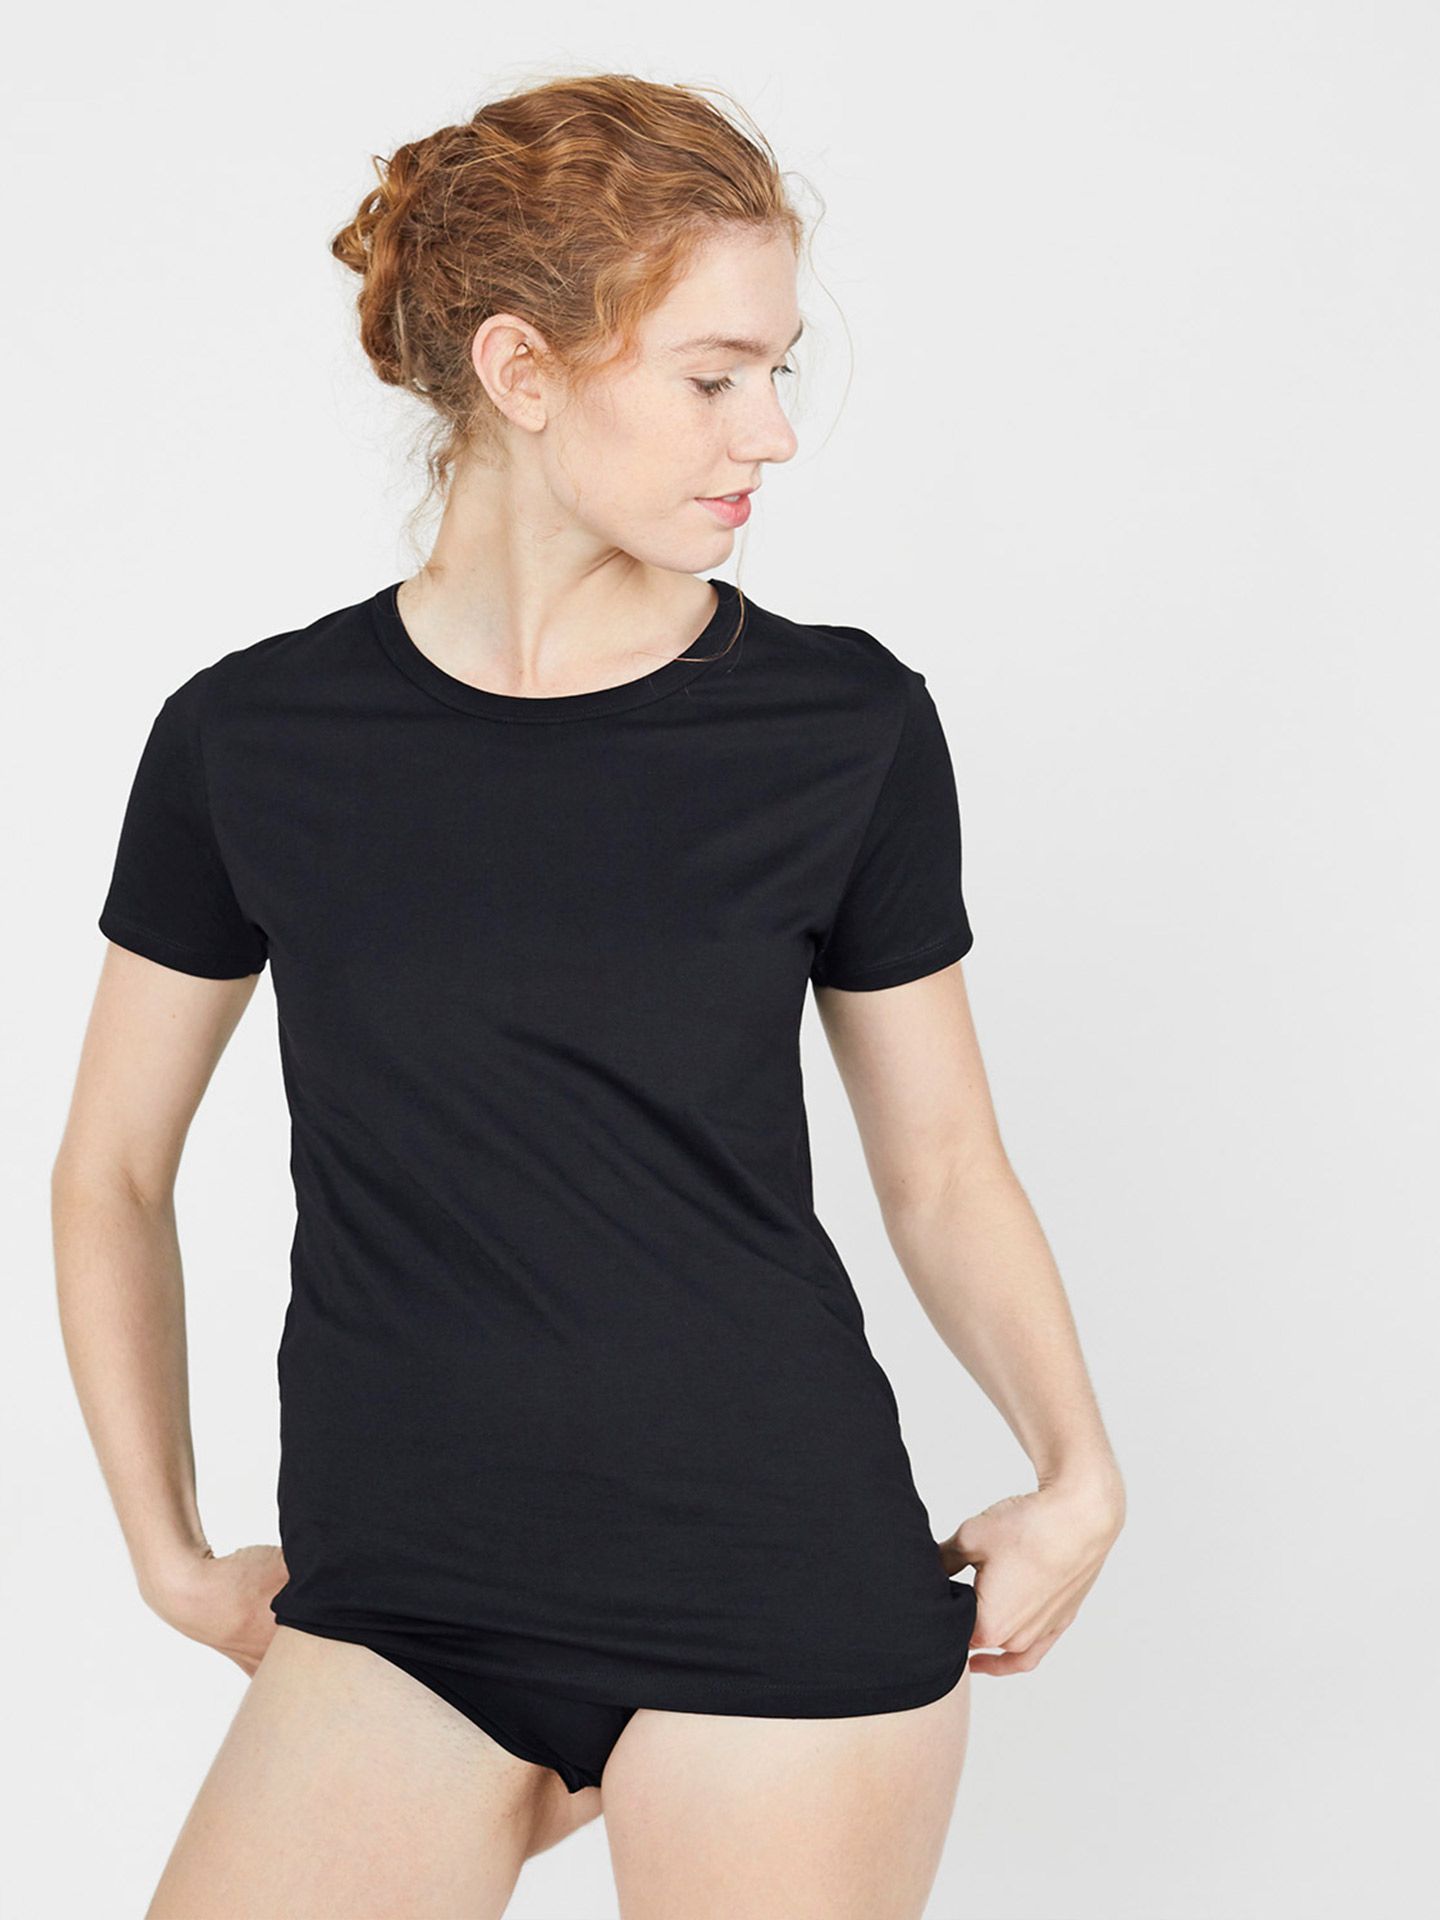 Elise R-T-Shirt schwarz 36